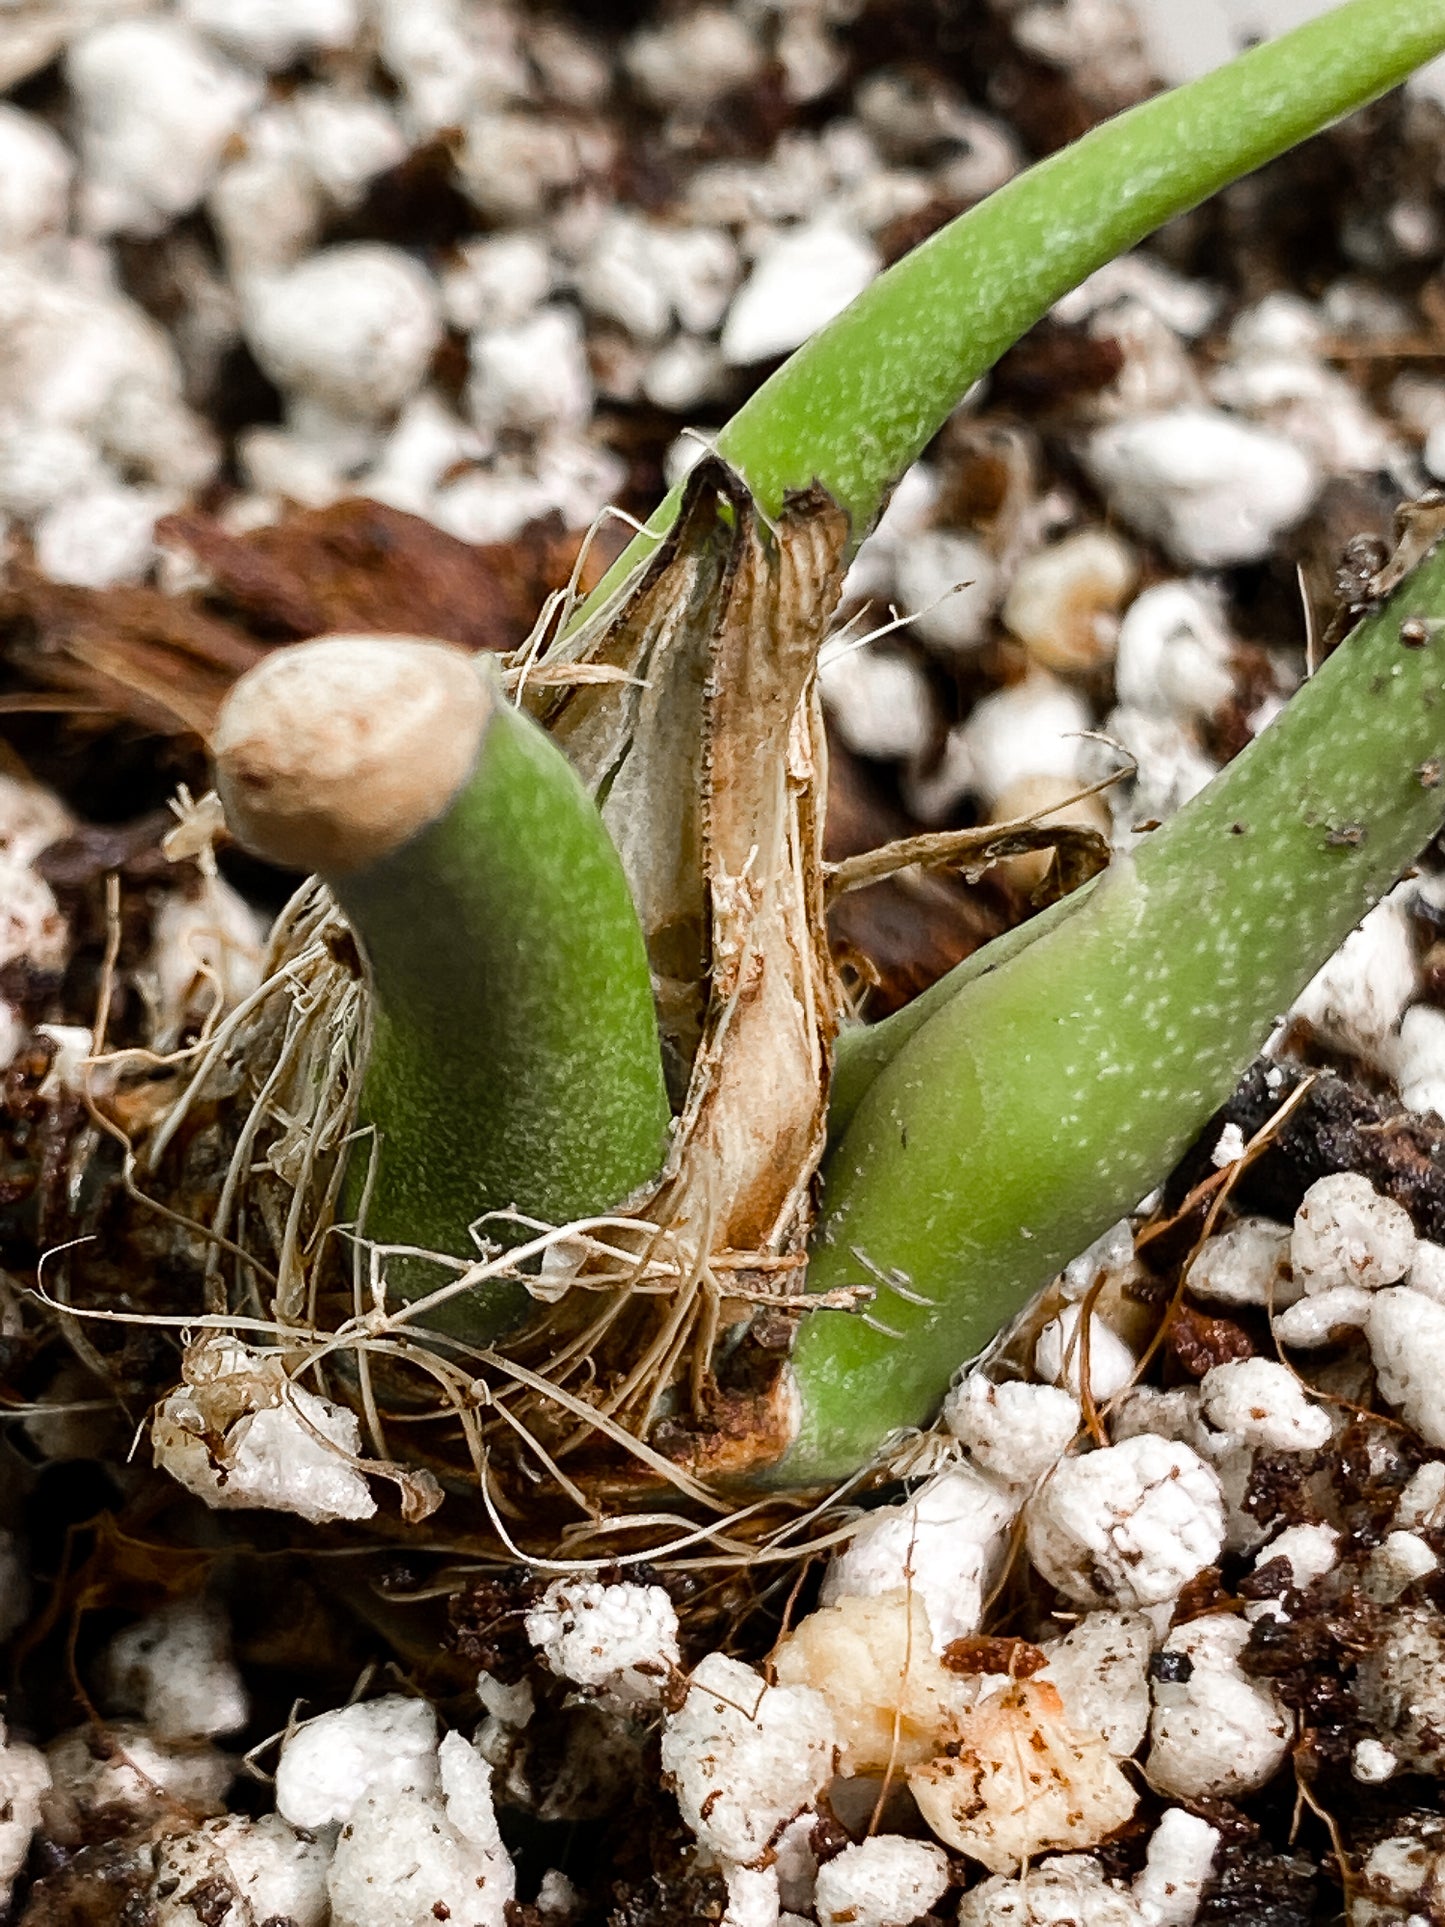 Anthurium argyrostachyum 'Velvety' 1 leaf 1 sprout fully rooted